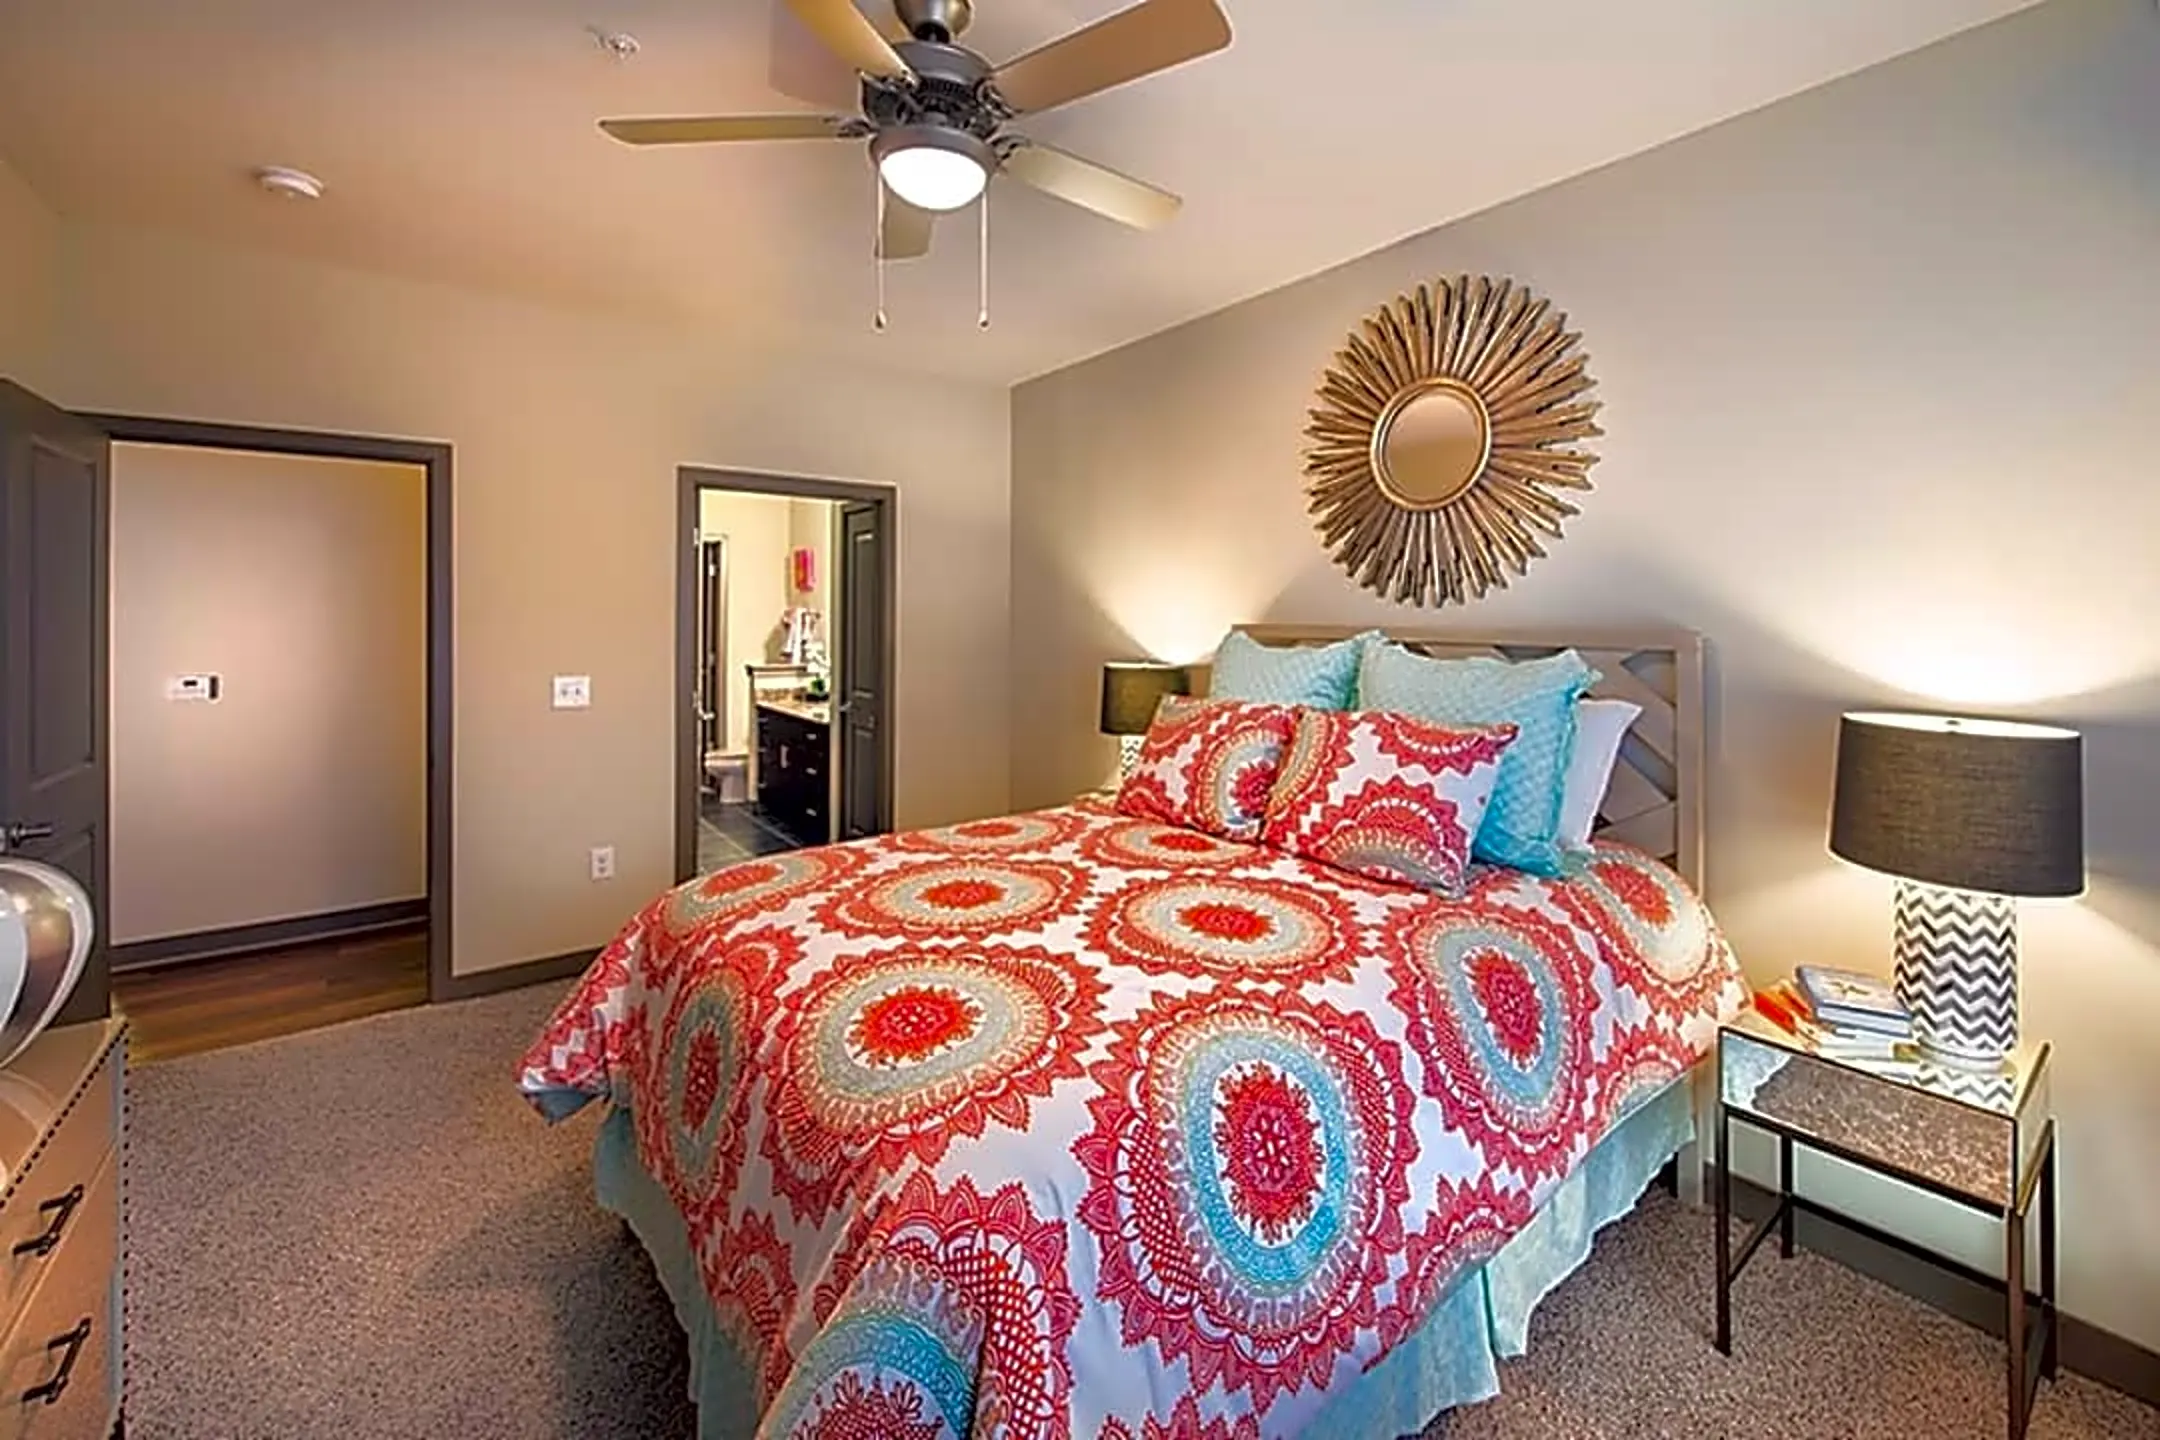 Bedroom - Forth Worth Ave - Dallas, TX